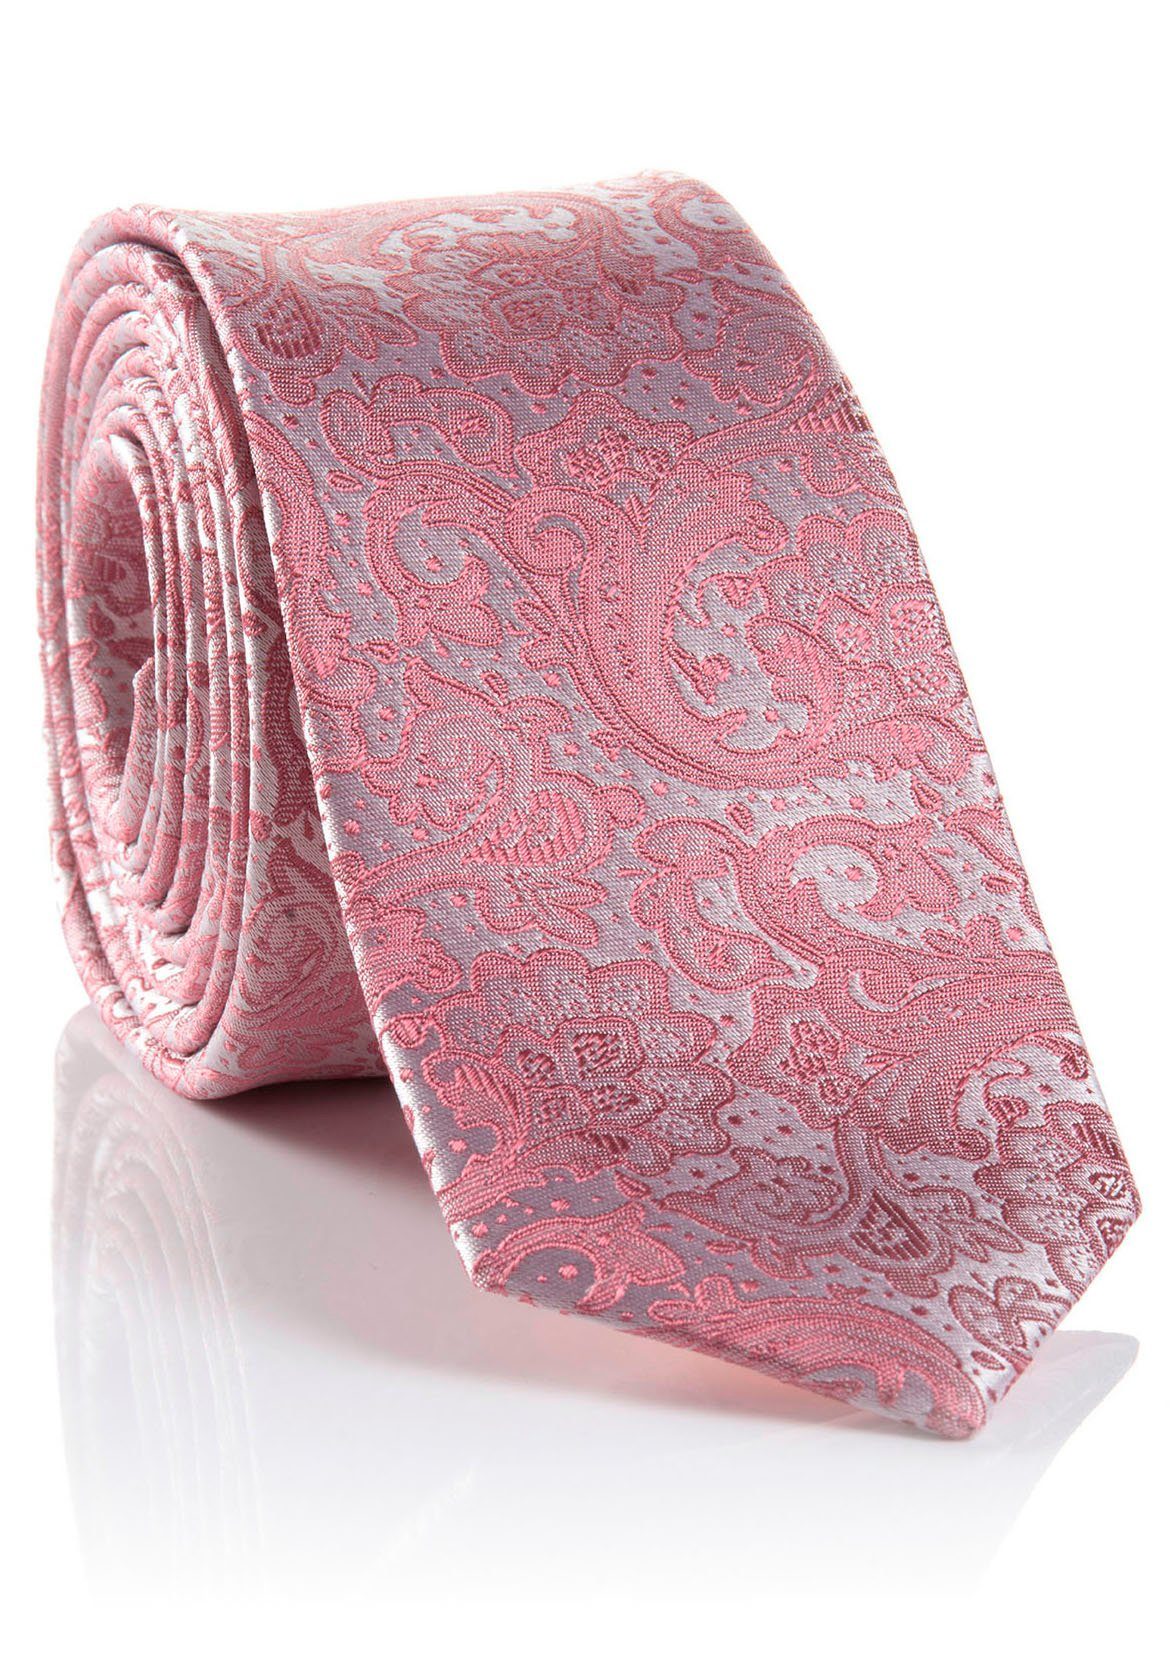 MONTI Krawatte LELIO Krawatte aus Paisley-Muster Seide, reiner